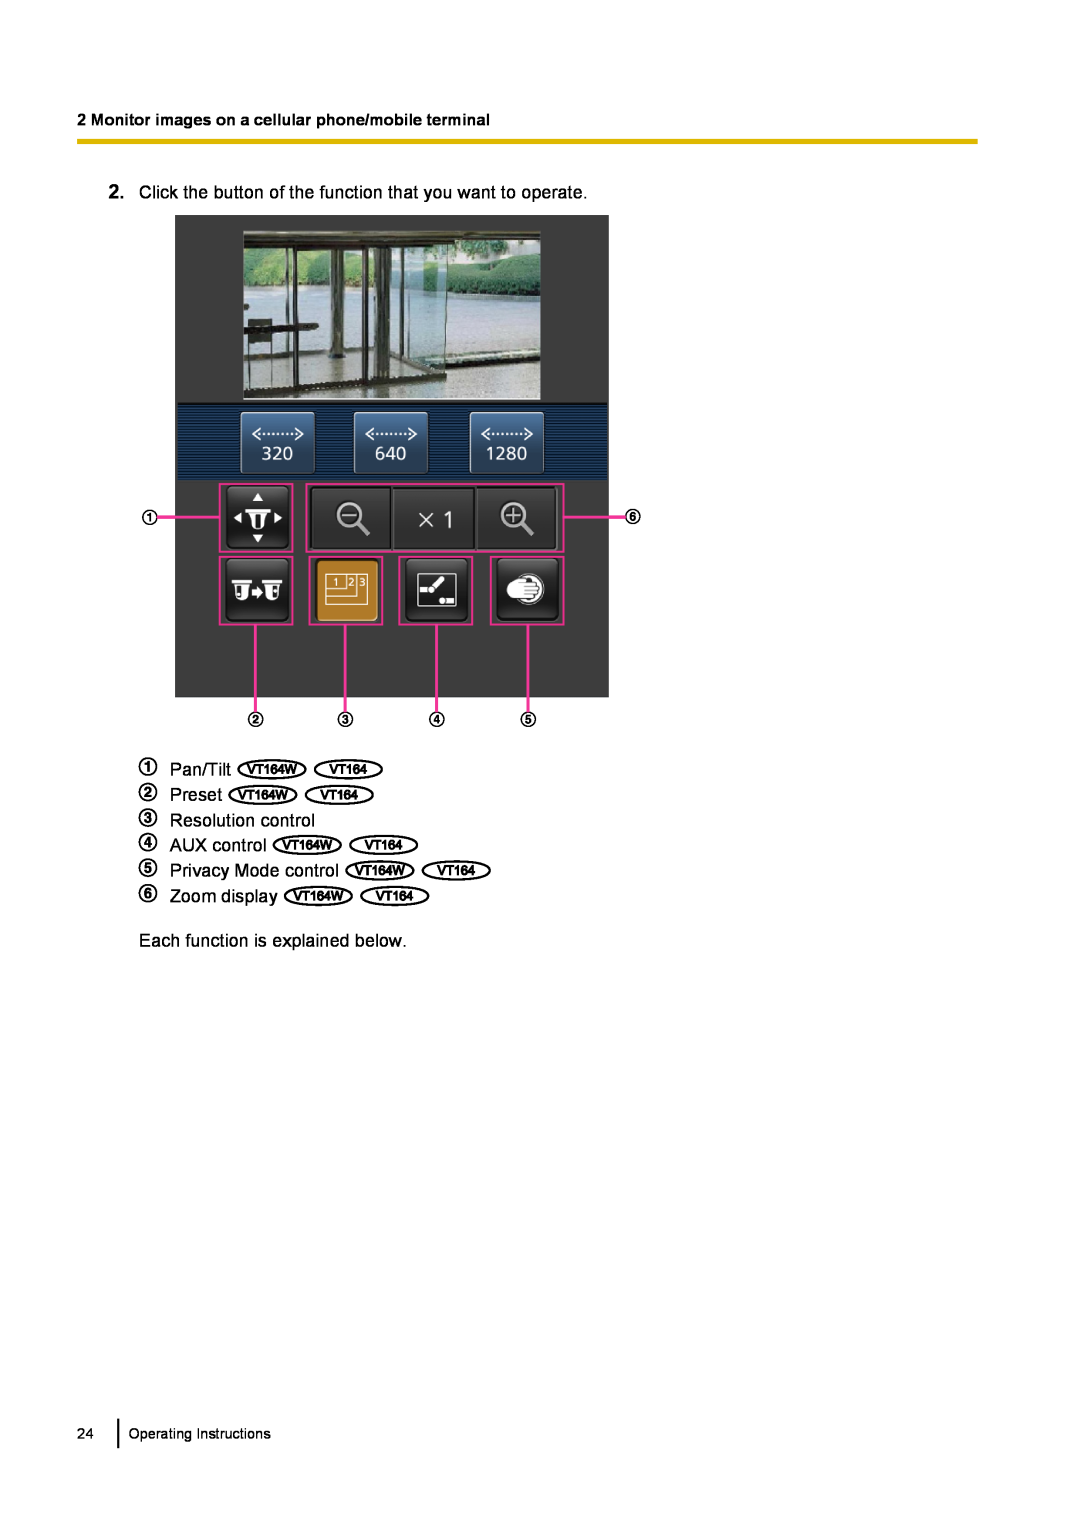 Panasonic BL-VT164 manual Pan/Tilt, Preset, Resolution control, AUX control, Privacy Mode control, Zoom display, B C D E 